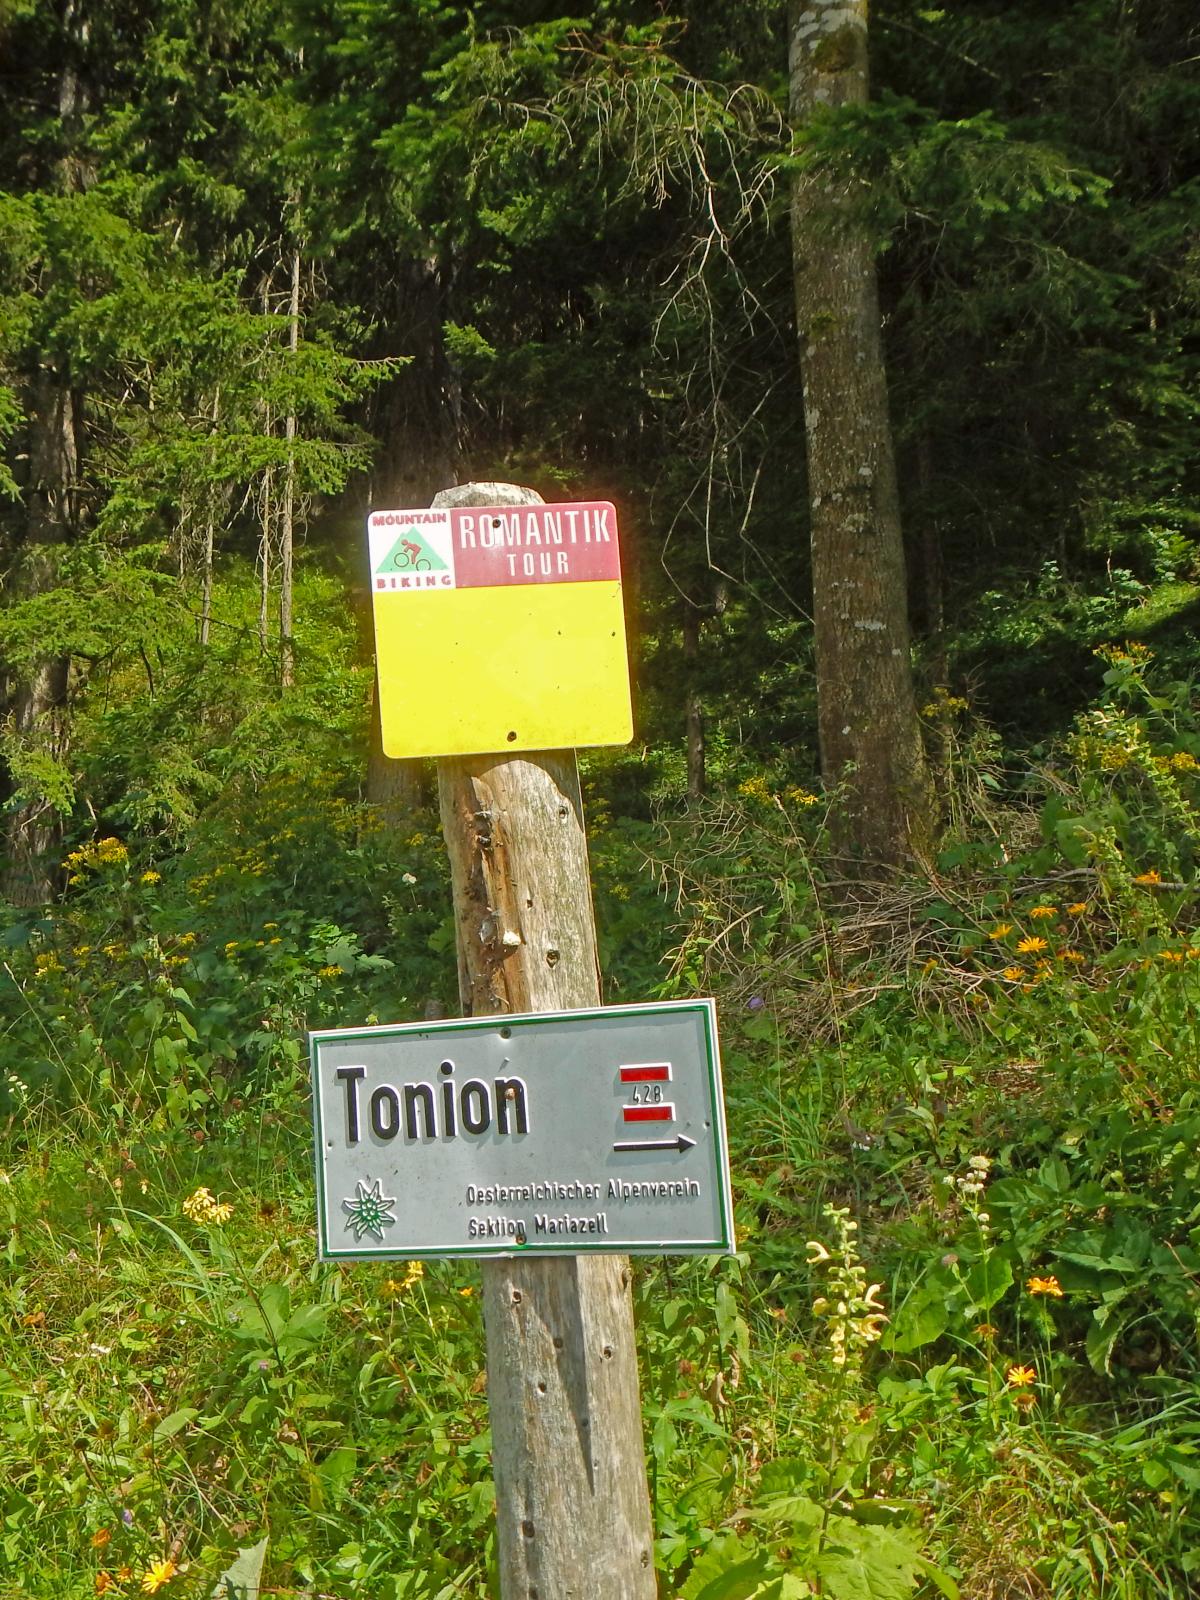 Tonion (252 Bildaufrufe)